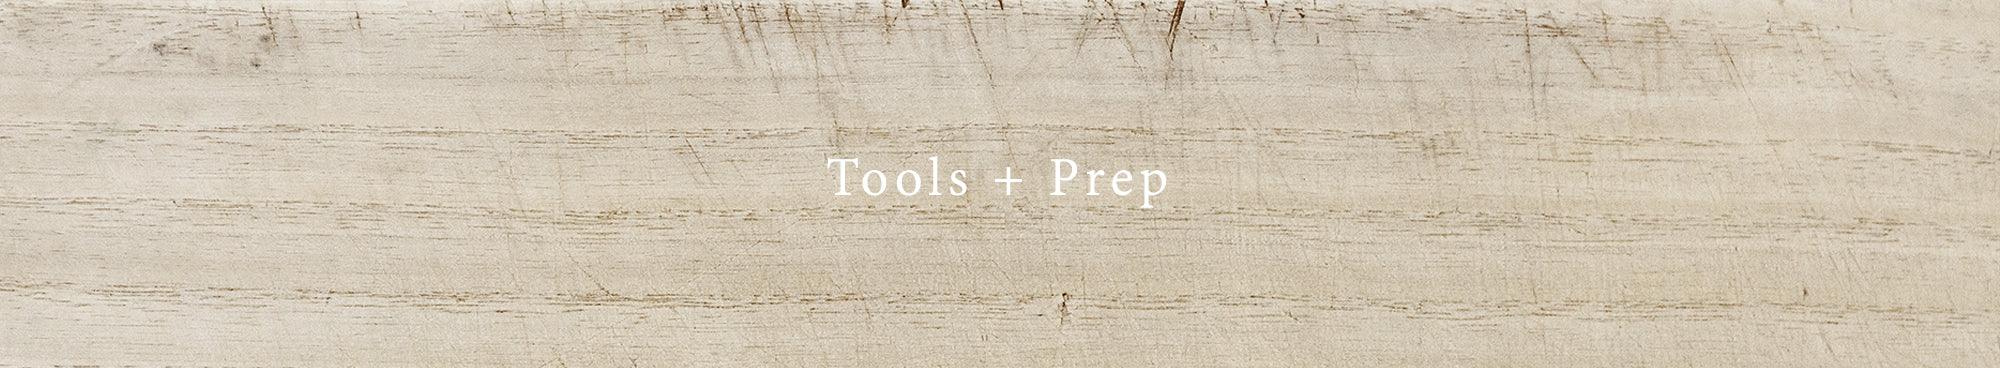 Tools + Prep - Rikumo